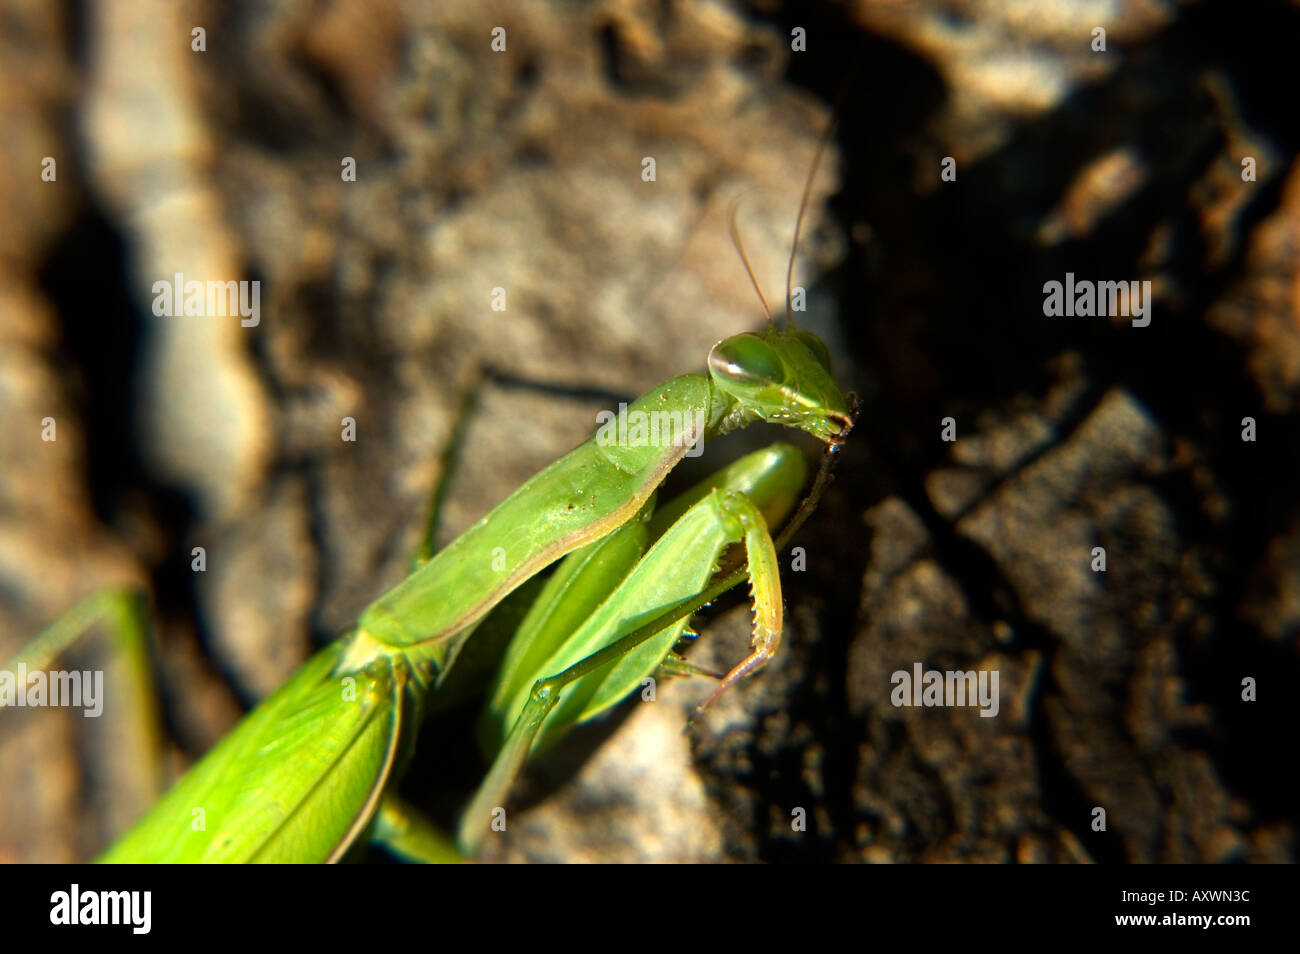 close up of a praying mantis above the bark of a tree - mantide - region of friuli venezia giulia – italy Stock Photo